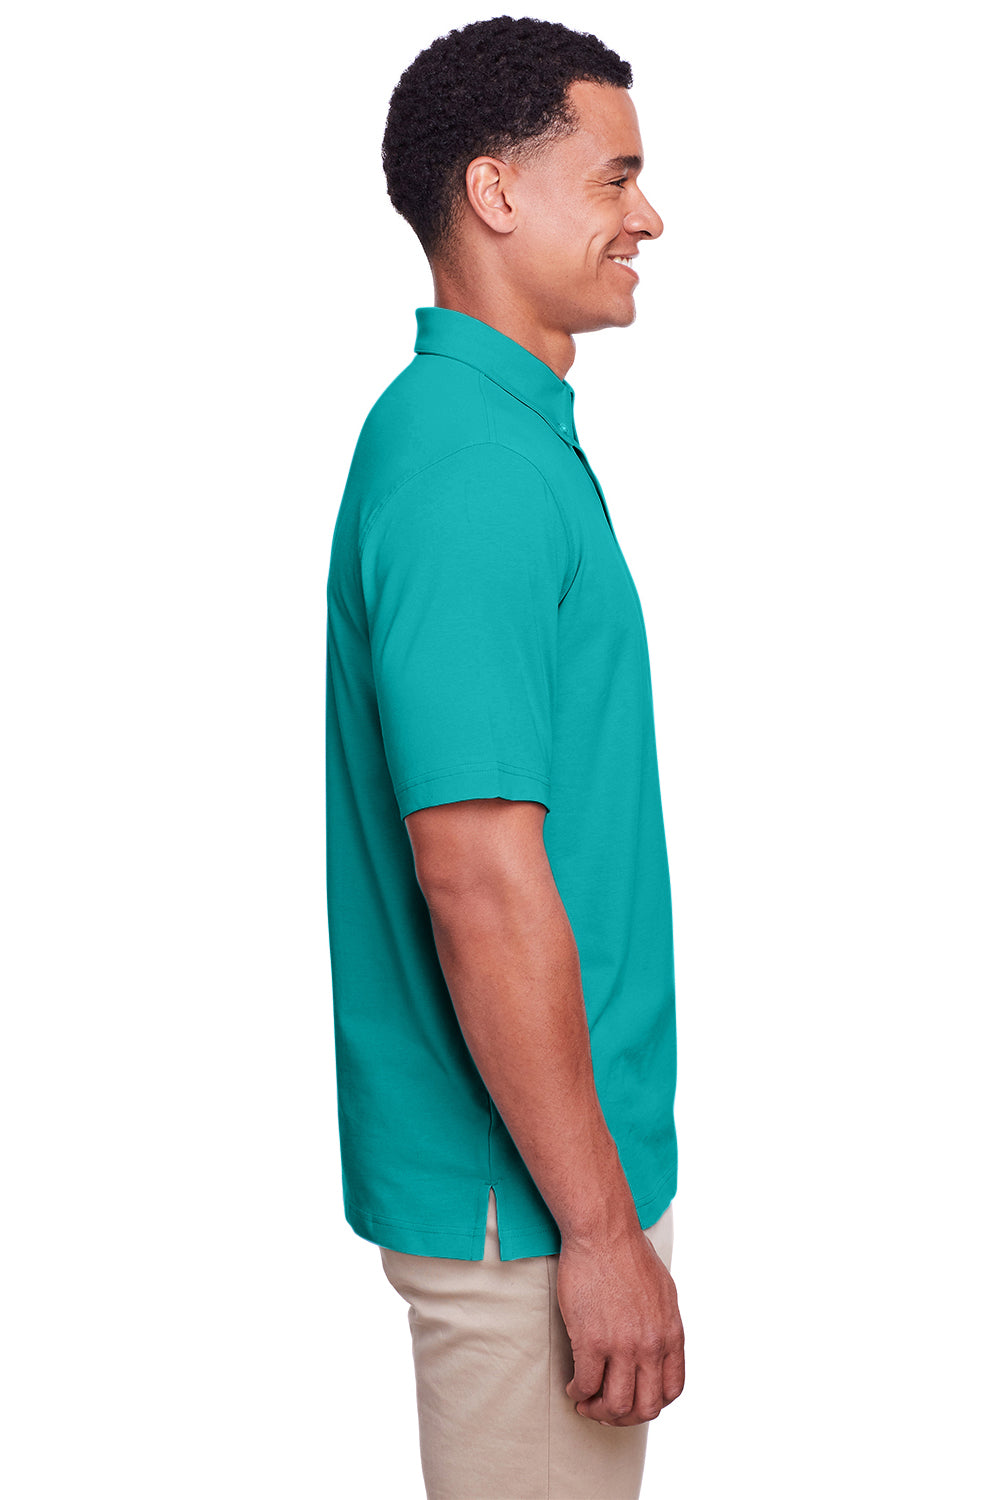 UltraClub UC105 Mens Lakeshore Performance Moisture Wicking Short Sleeve Polo Shirt Jade Green Side